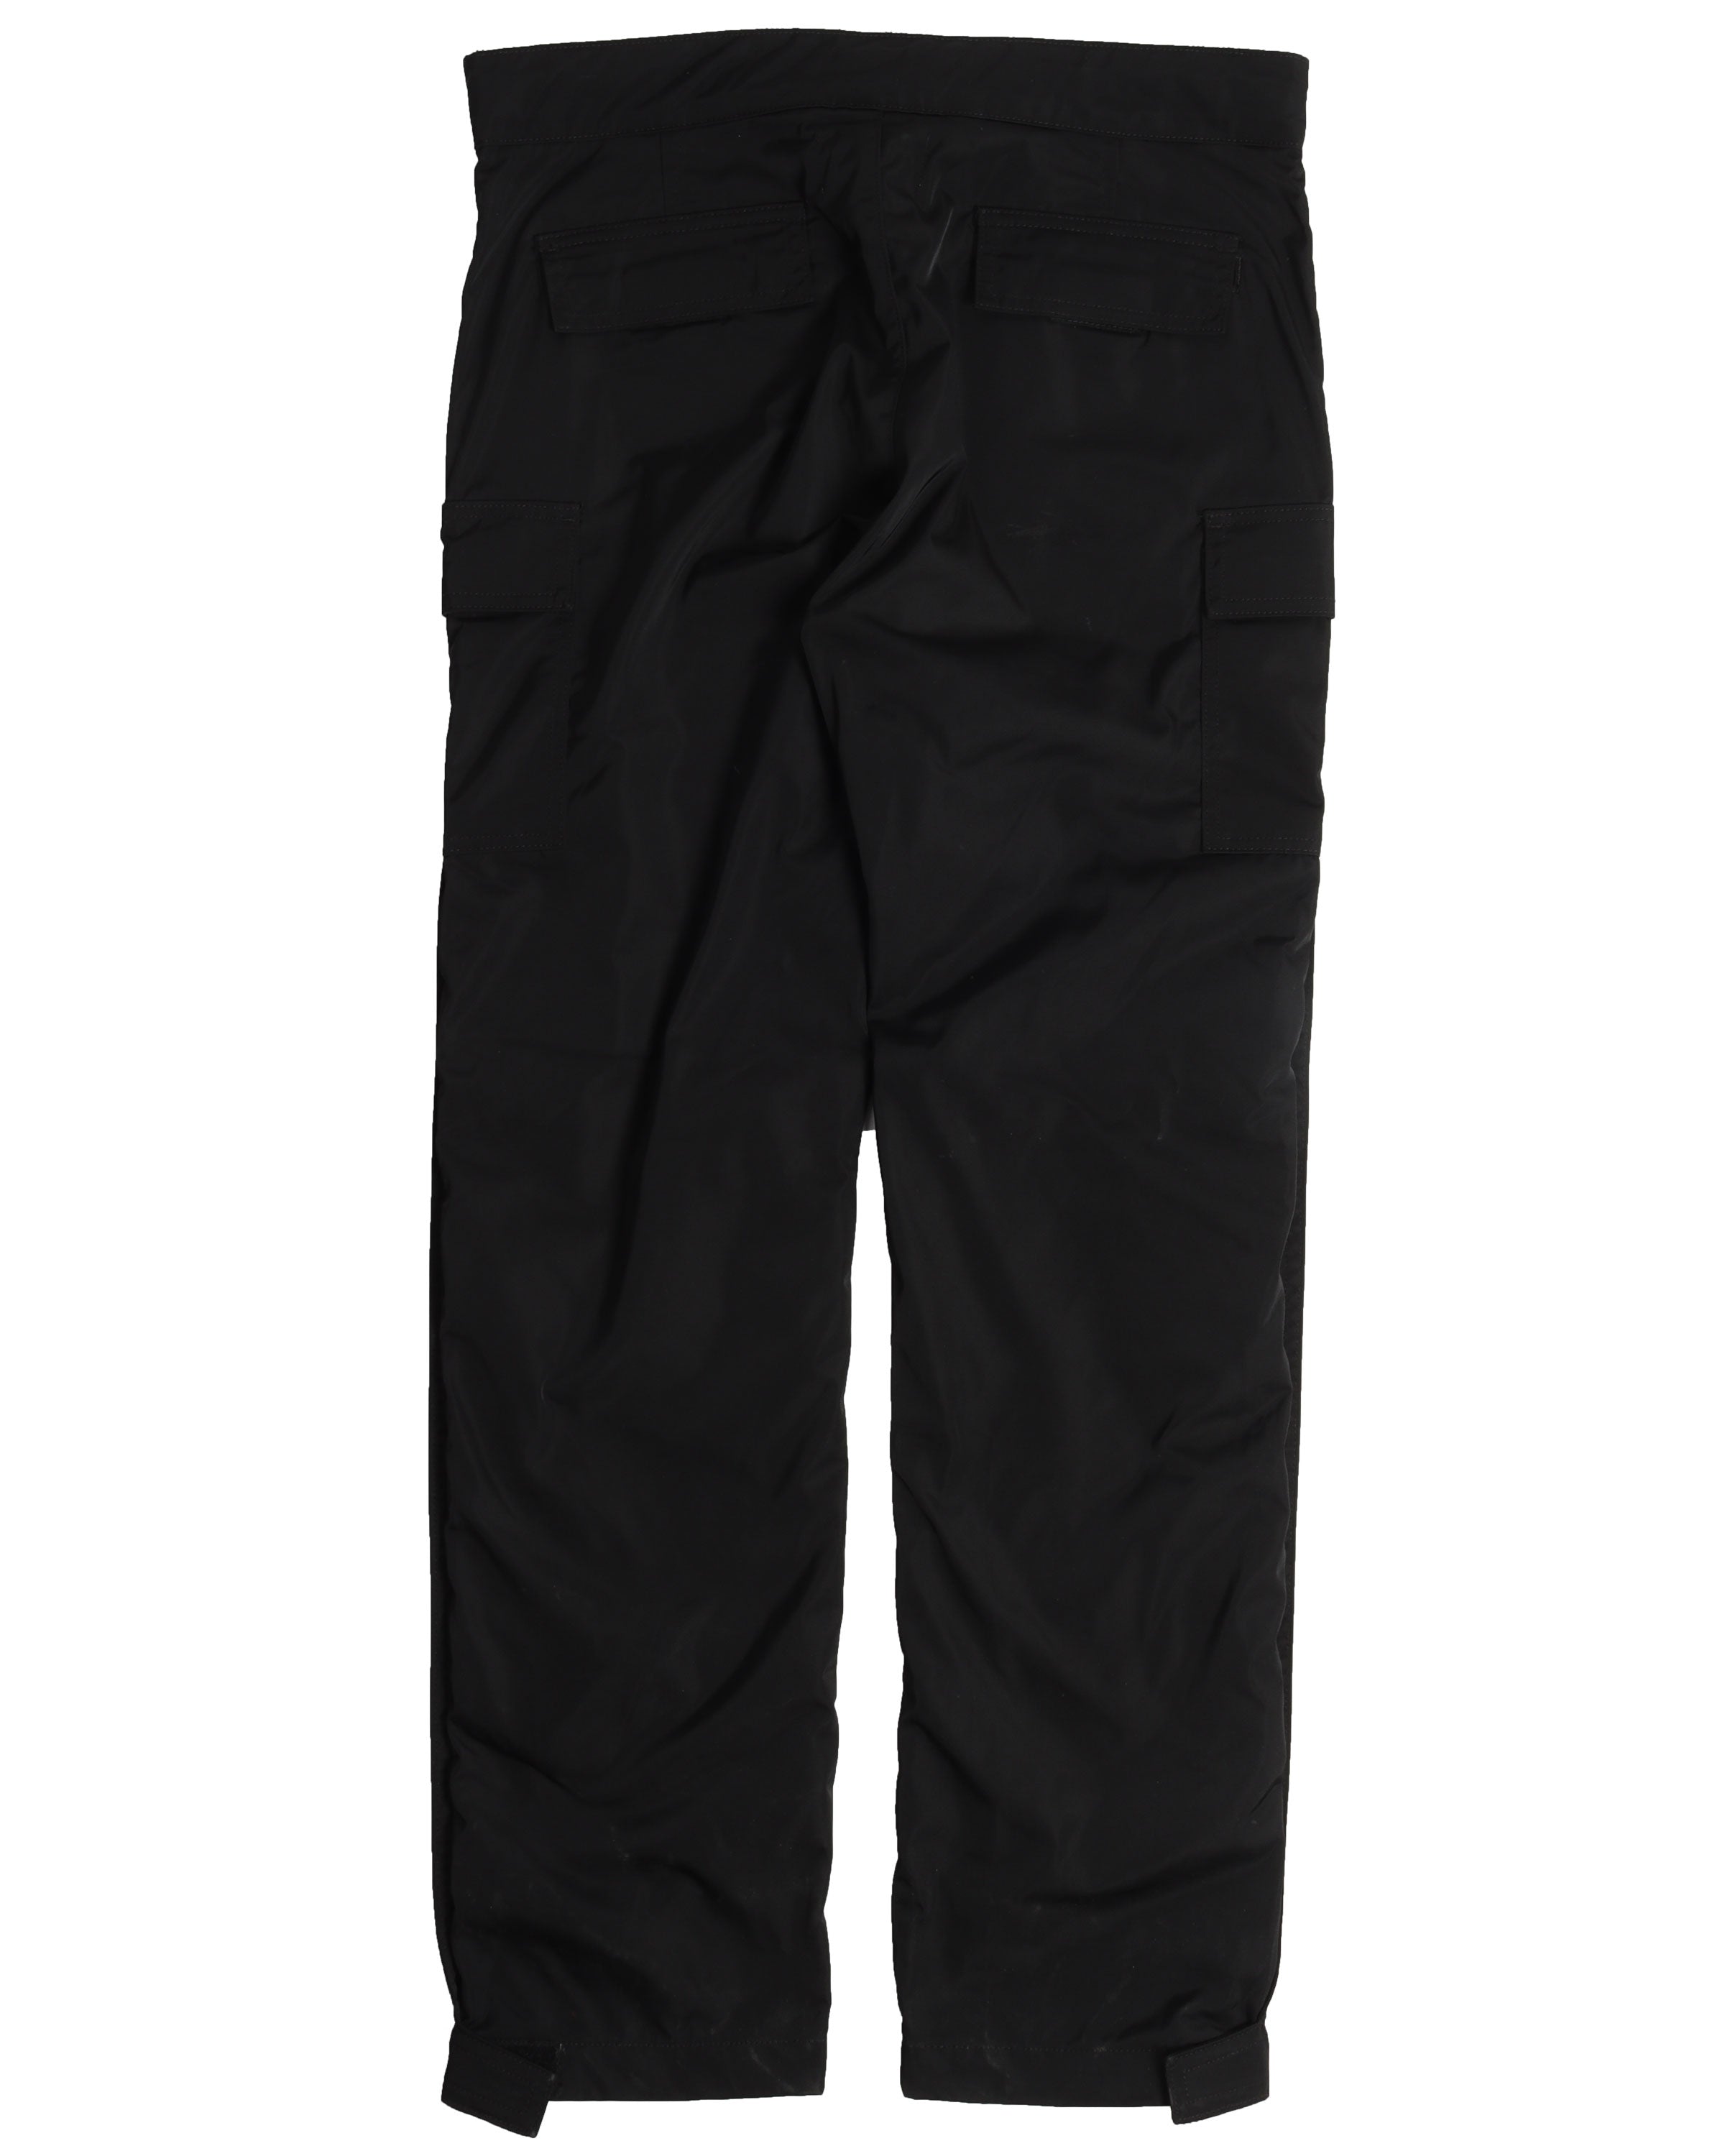 Black Nylon Pants